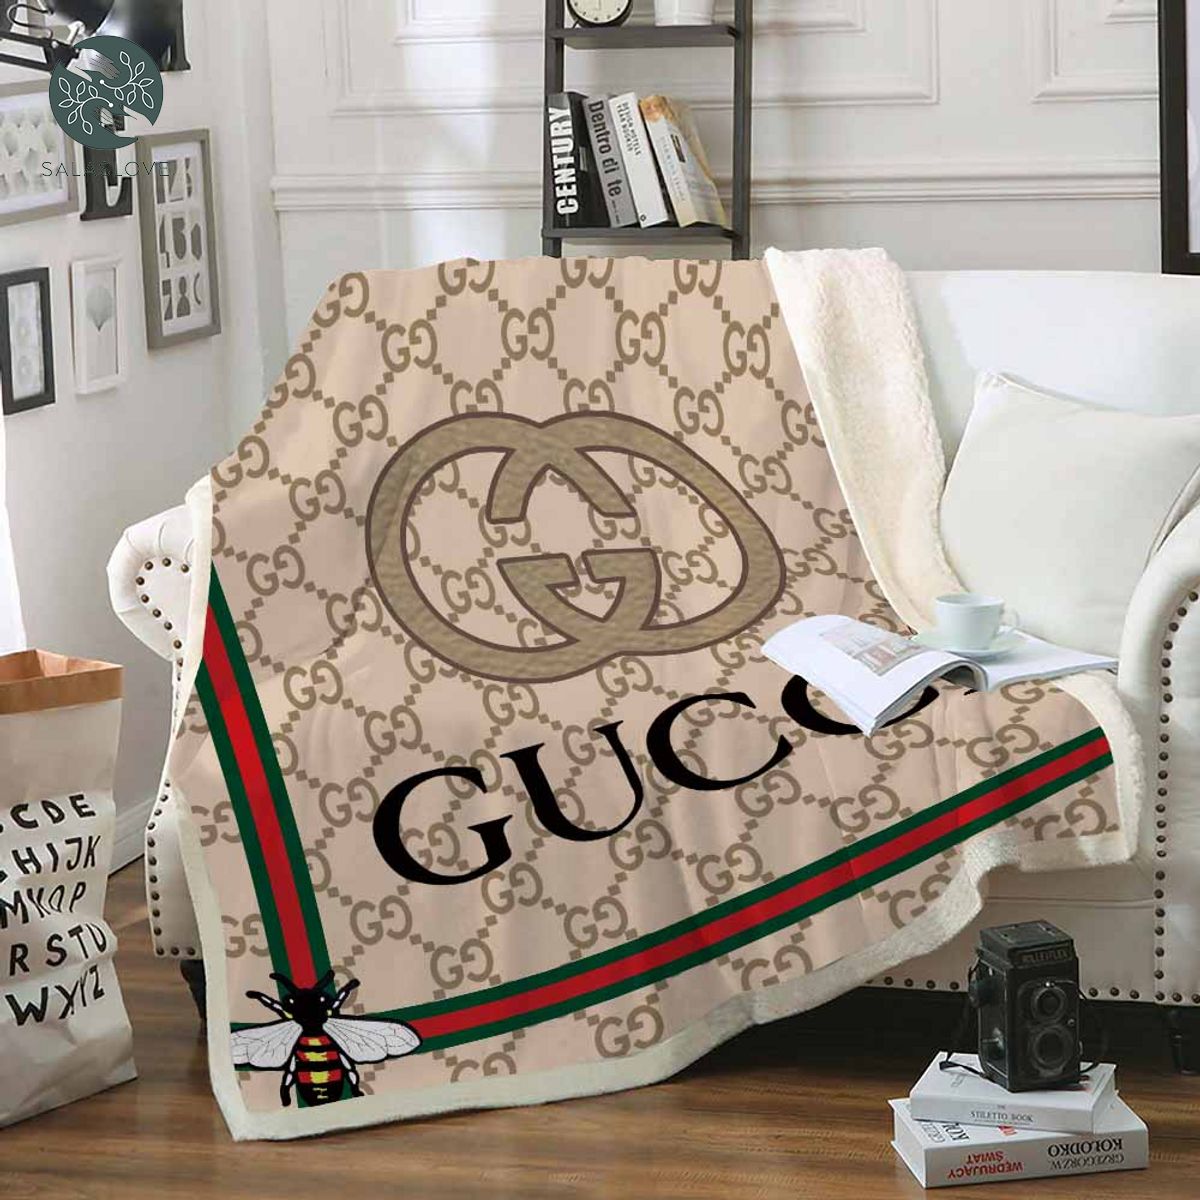 Gucci Blanket Bedroom Blanket Air Conditioning Blanket Luxruy Bedding